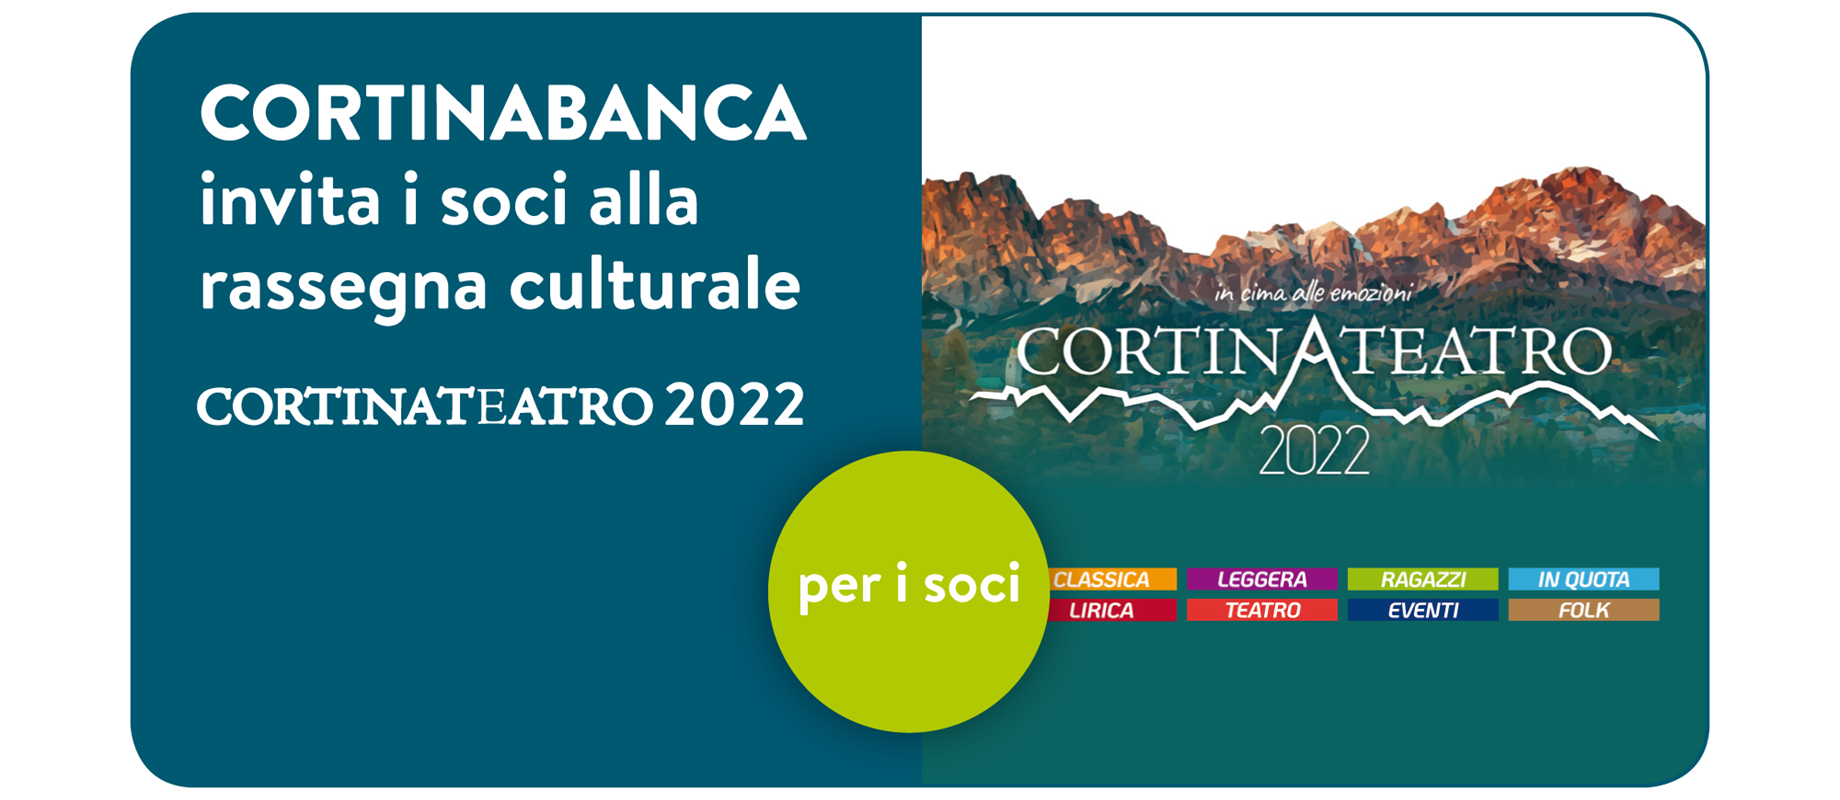 Iniziativa per i Soci - "CortinAteatro" estate 2022 